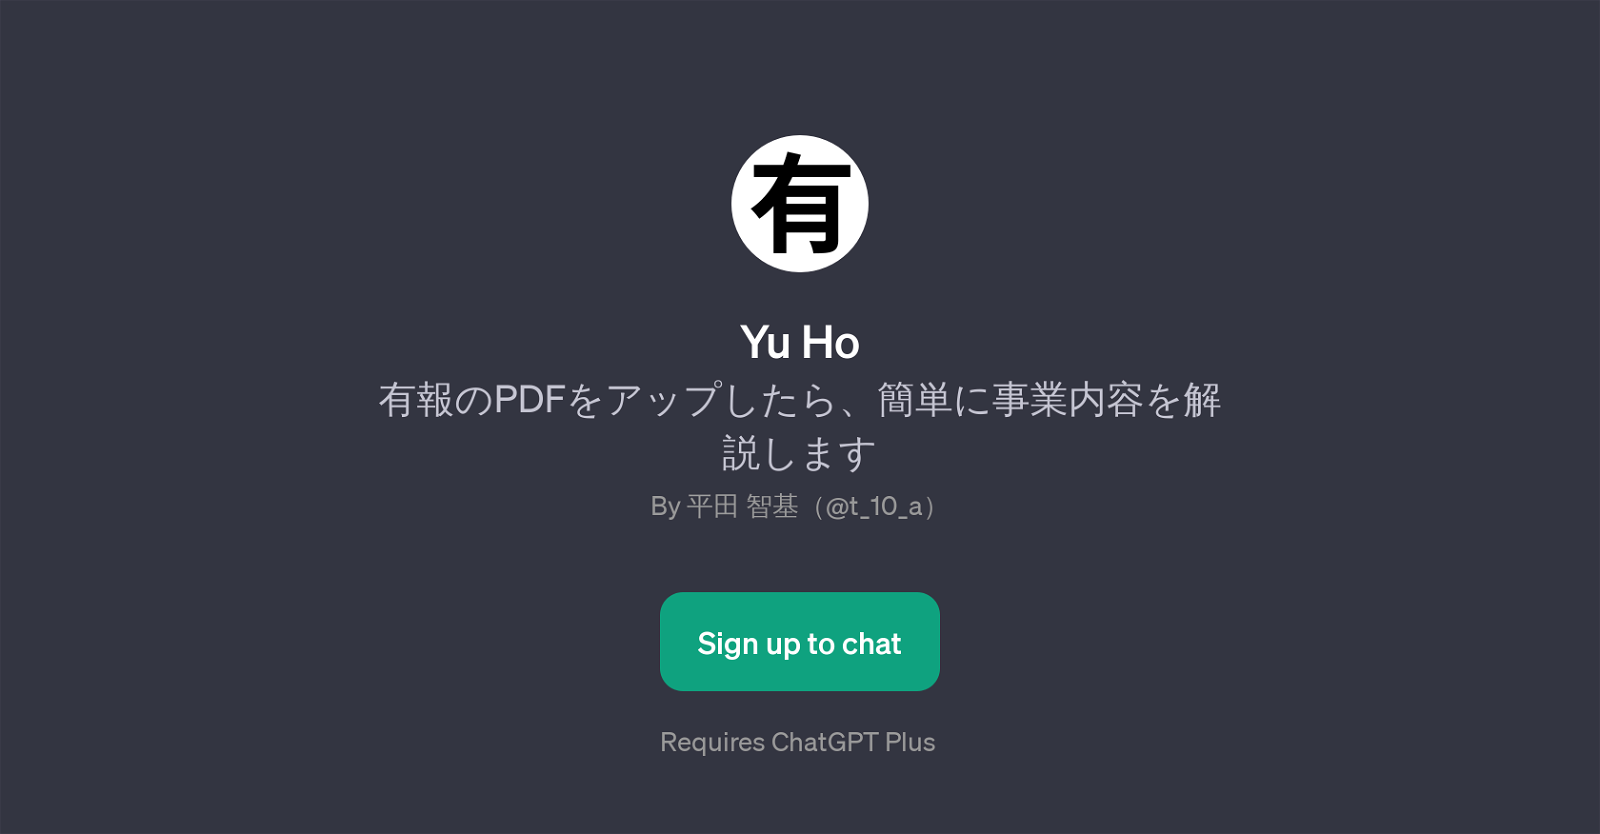 Yu Ho website